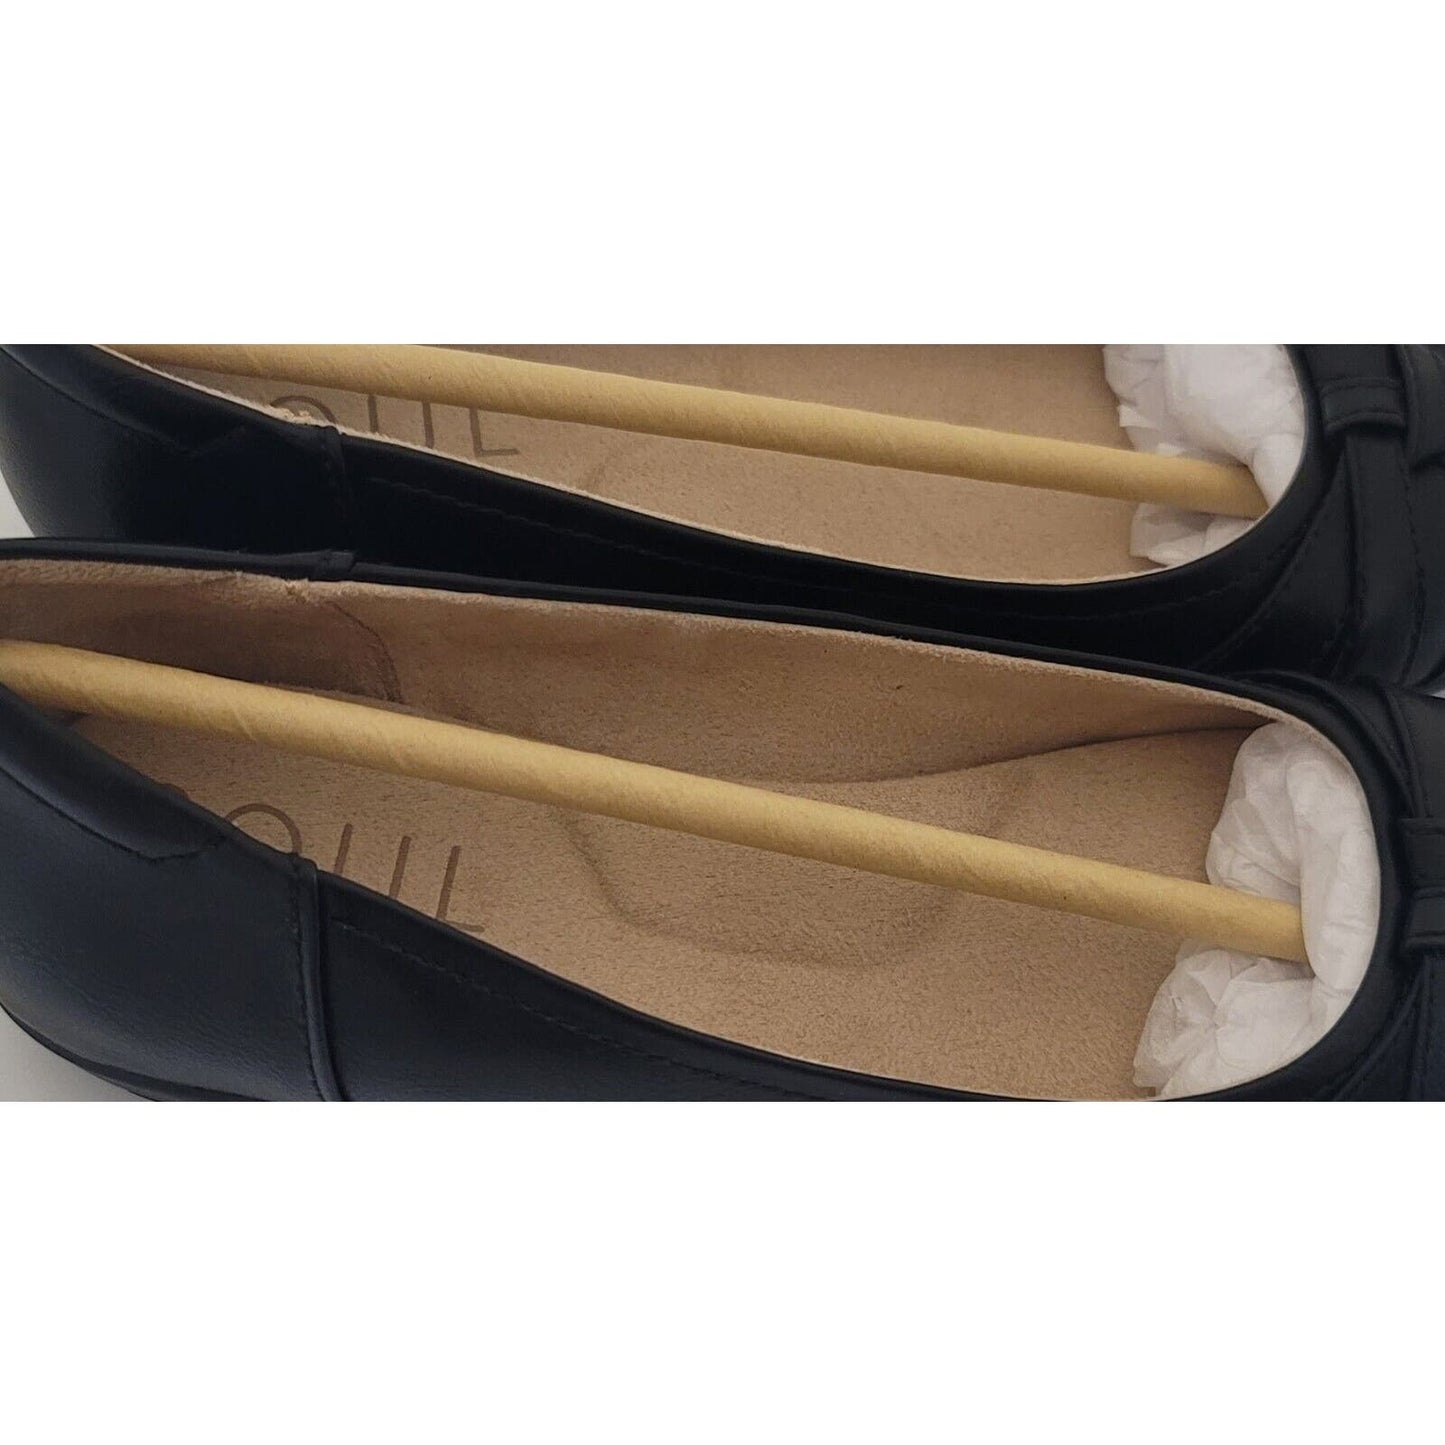 SOUL Naturalizer Women's Gift Ballet Flat Comfort 6M Shoes